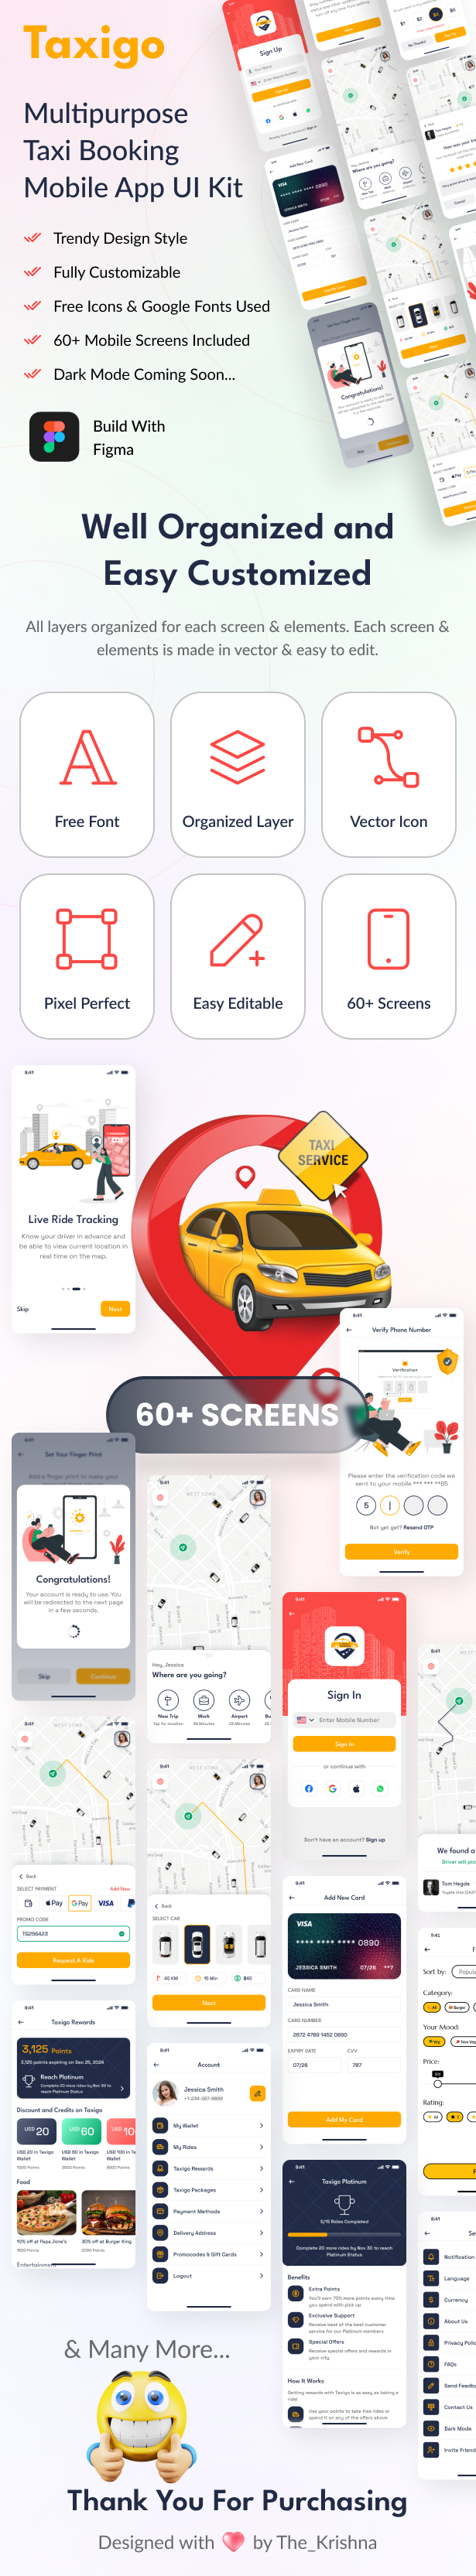 Taxi Booking and Car Rental Mobile App UI Kit Figma Template - Taxigo - 1